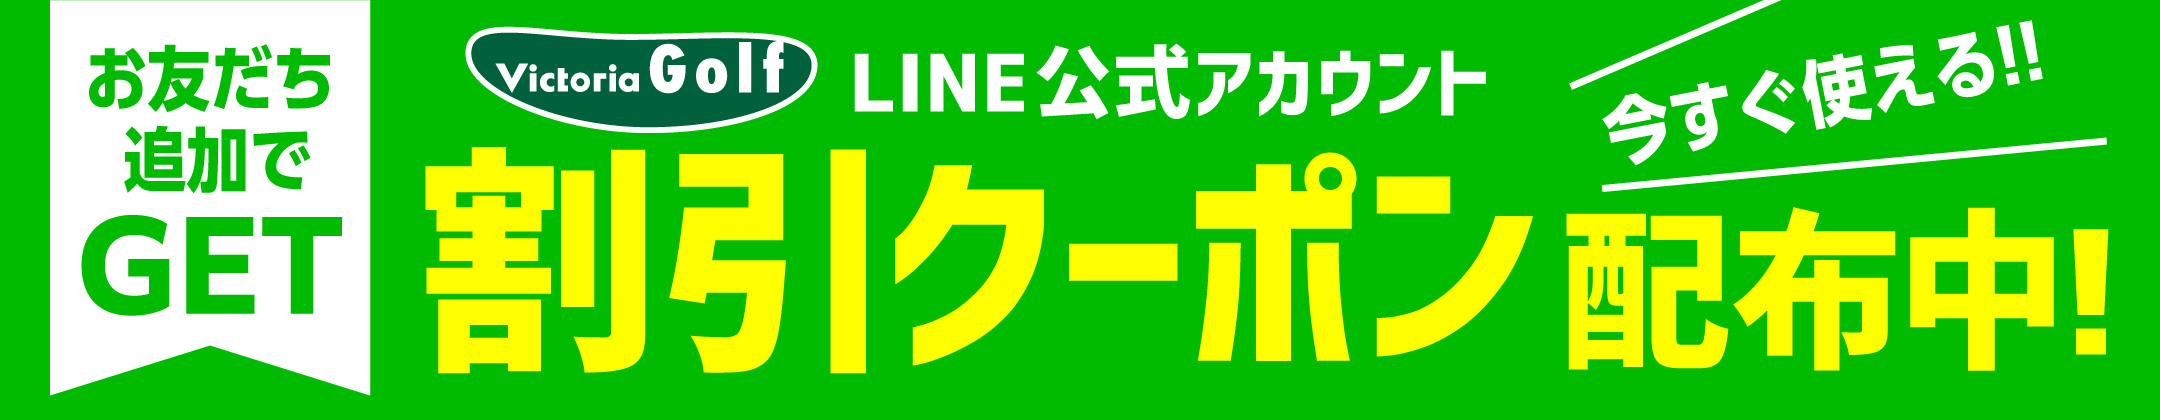 VG_LINE